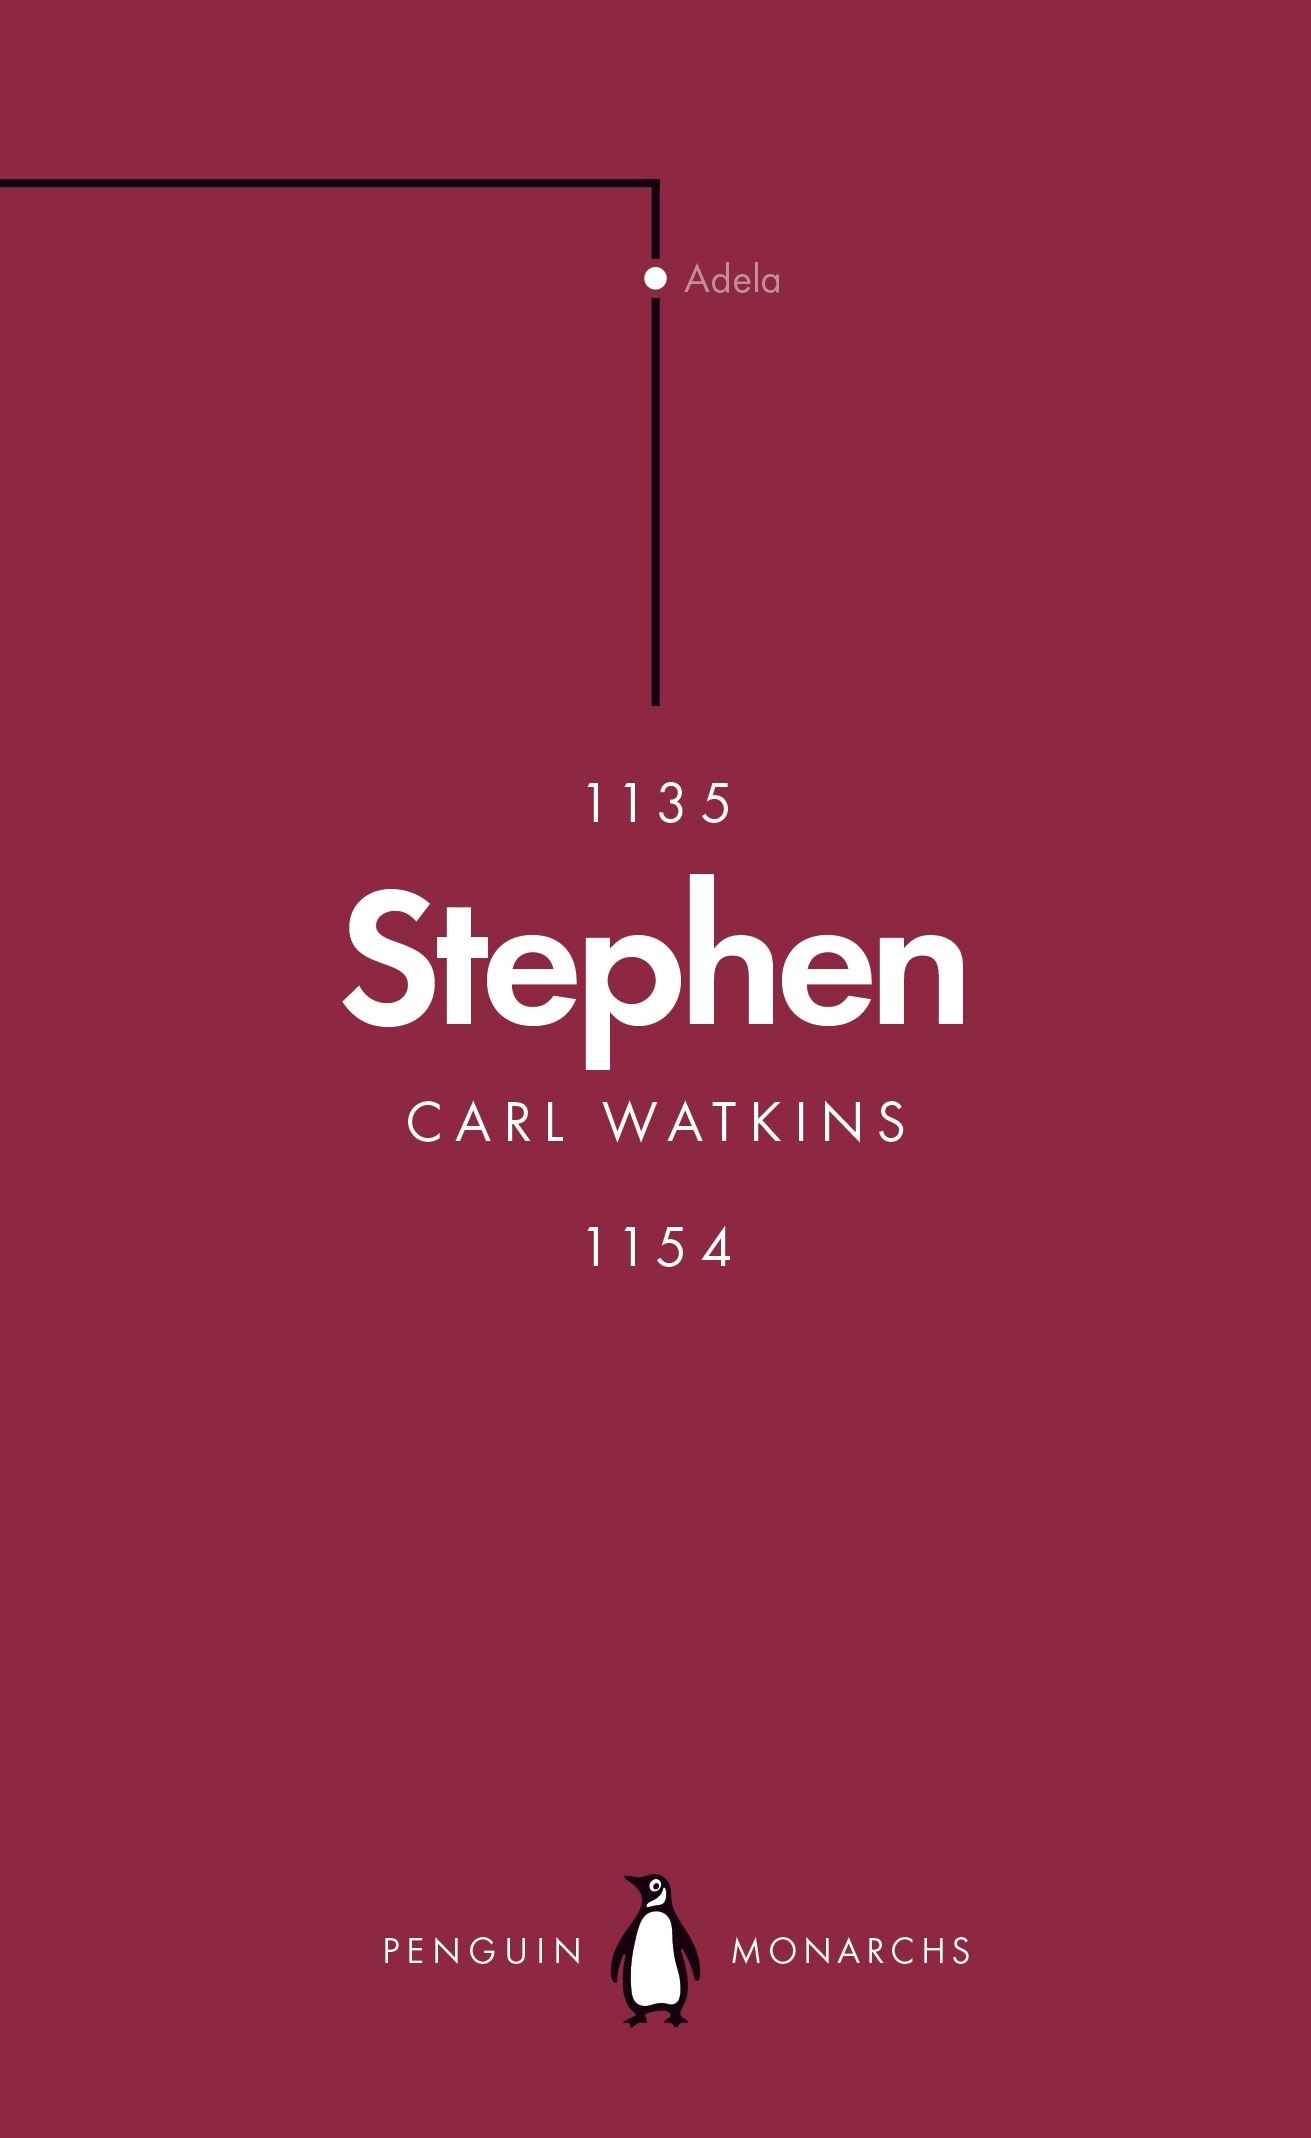 Book “Stephen (Penguin Monarchs)” by Carl Watkins — April 25, 2019